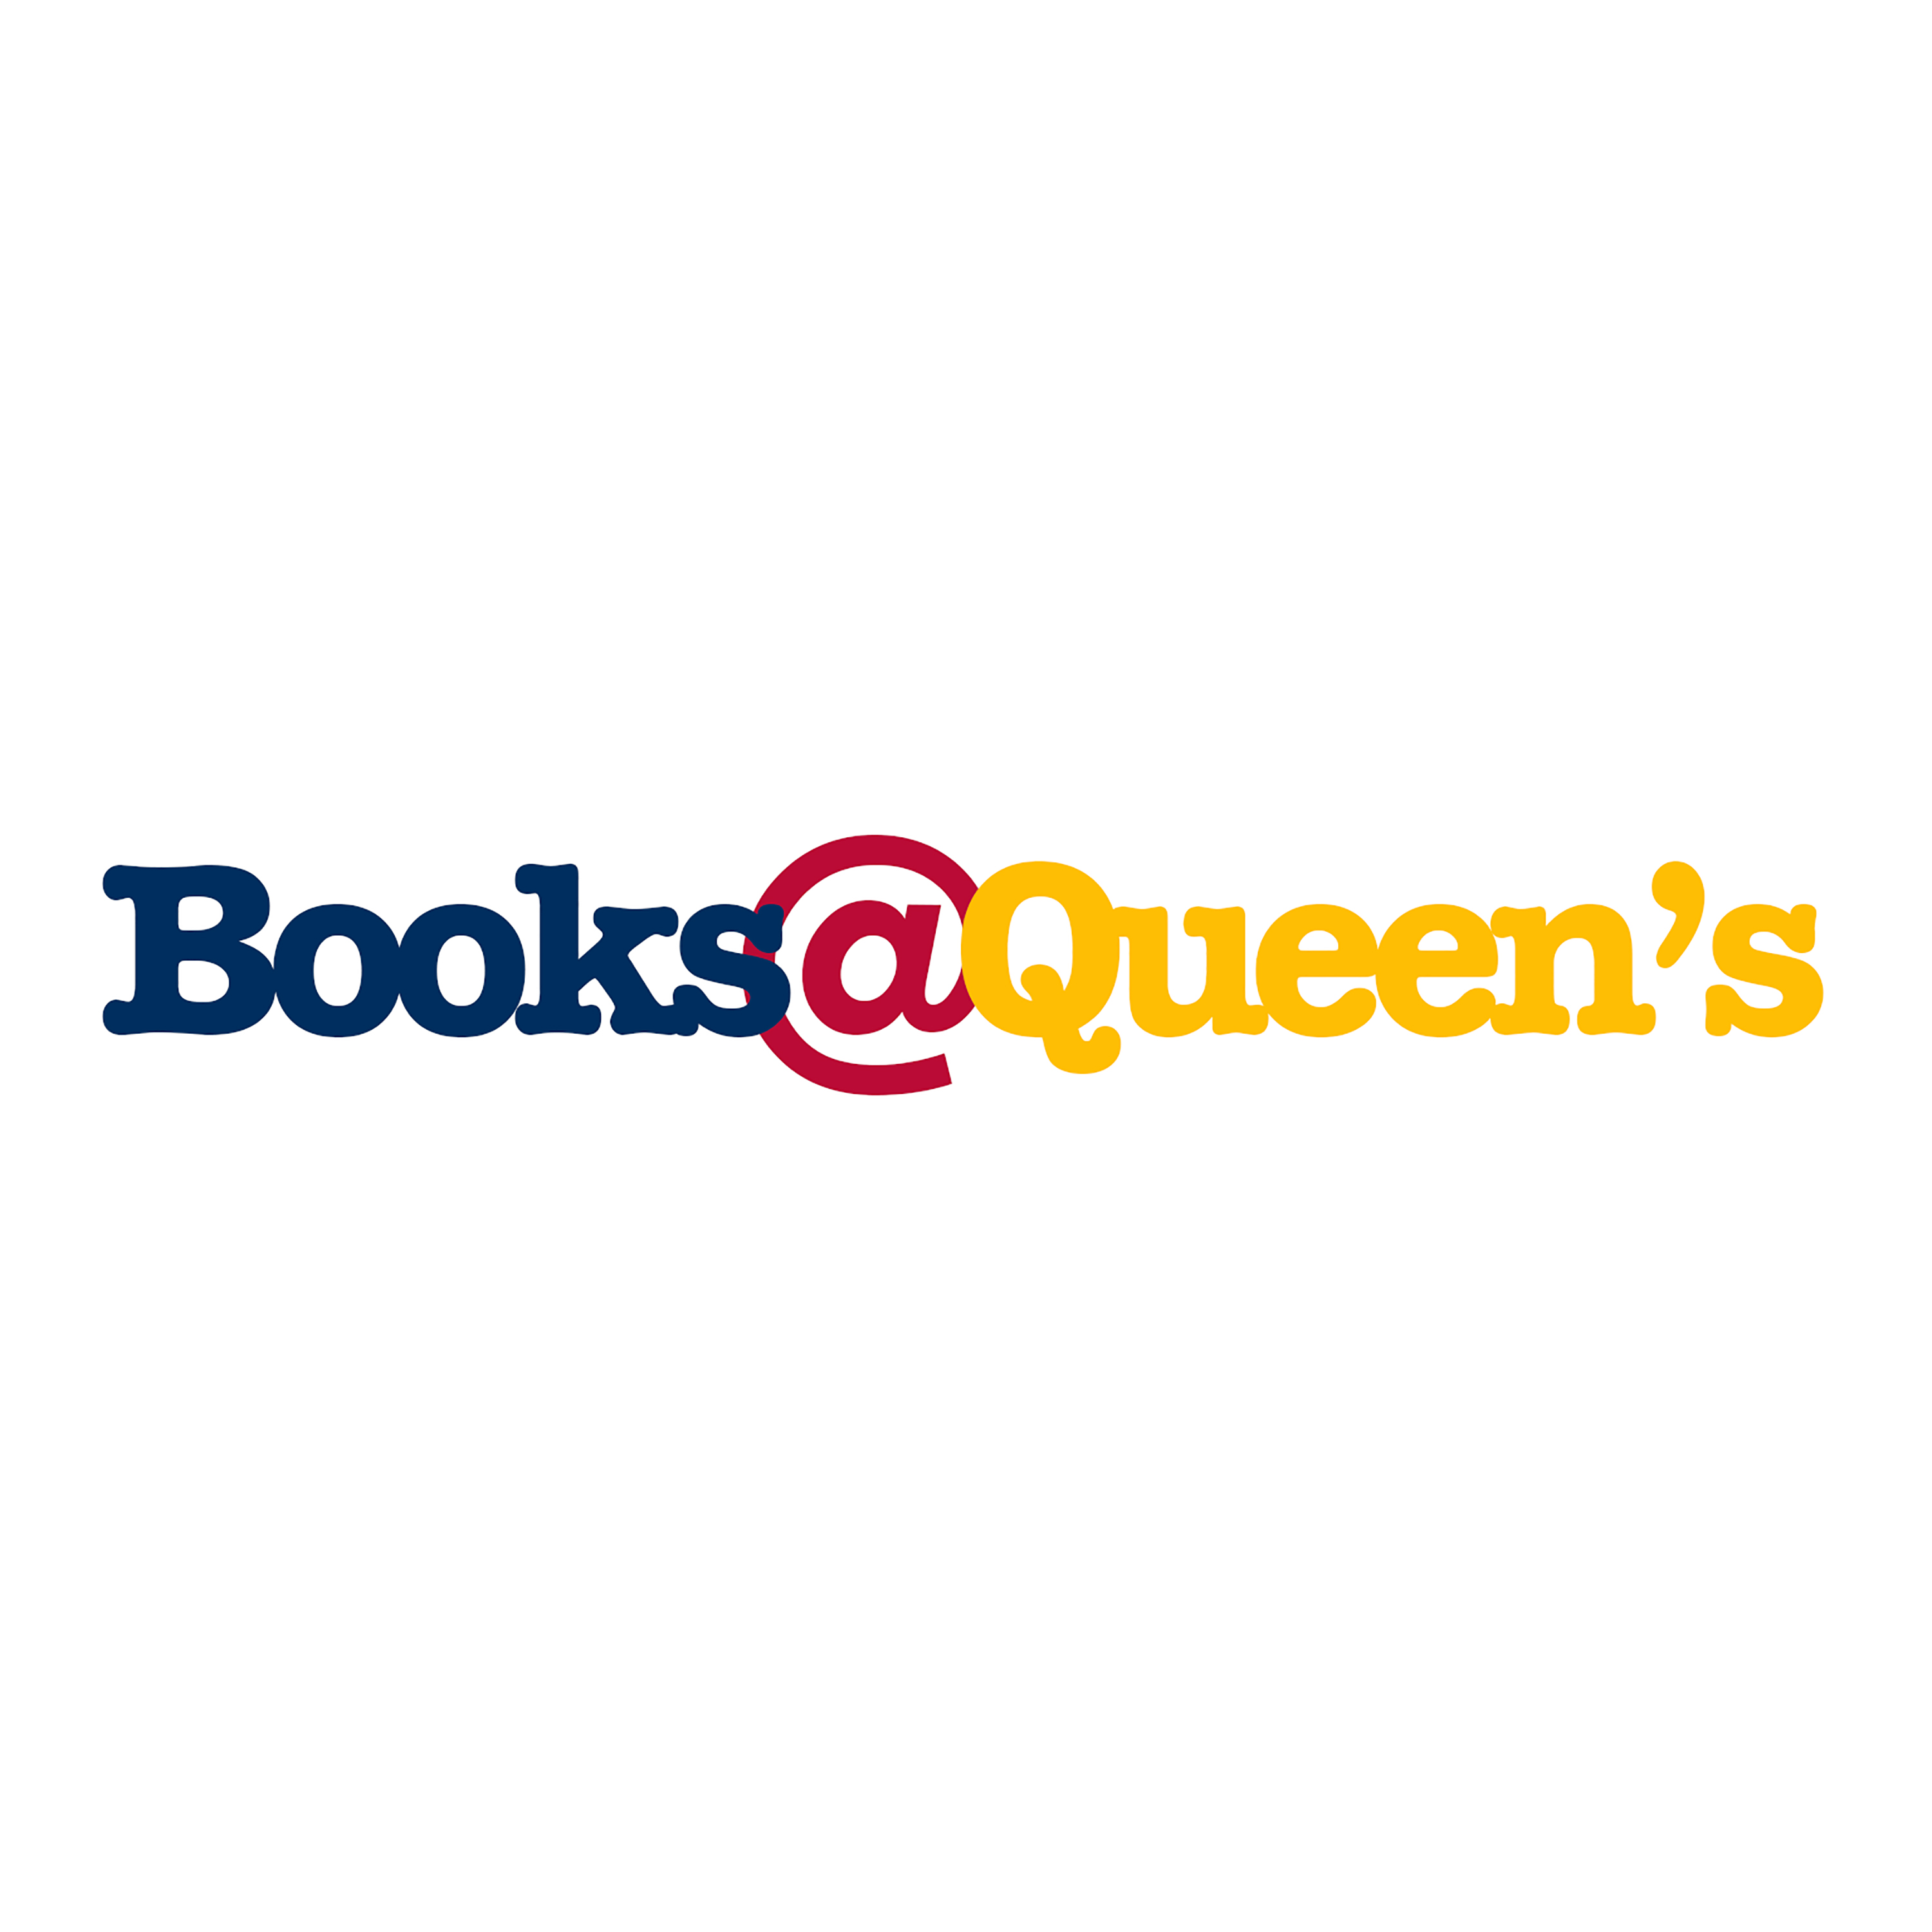 Books@Queen’s: John Burge